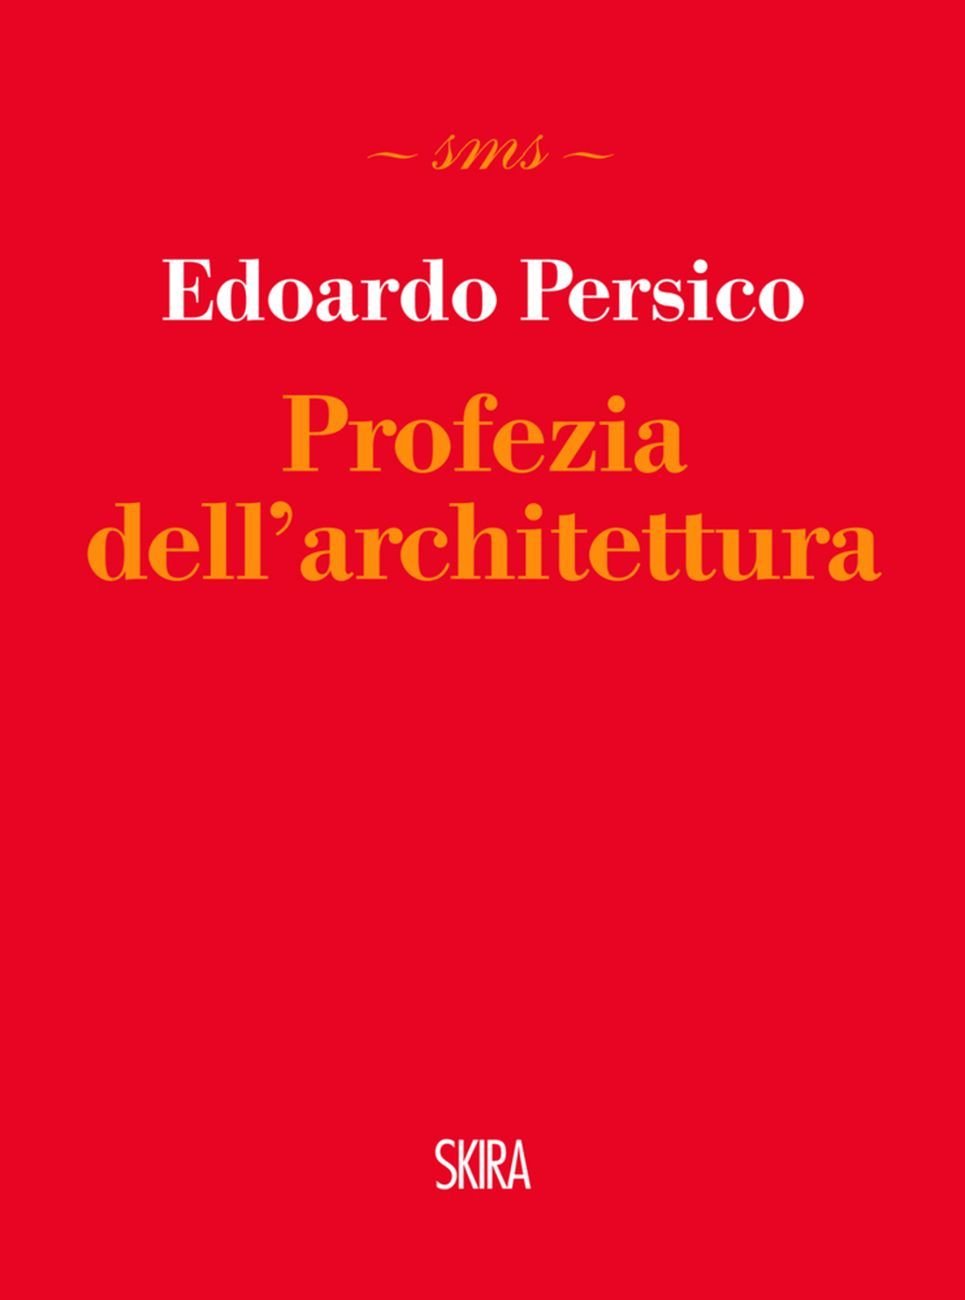 Edoardo Persico - Profezia dell’architettura (Skira, Milano 2012)